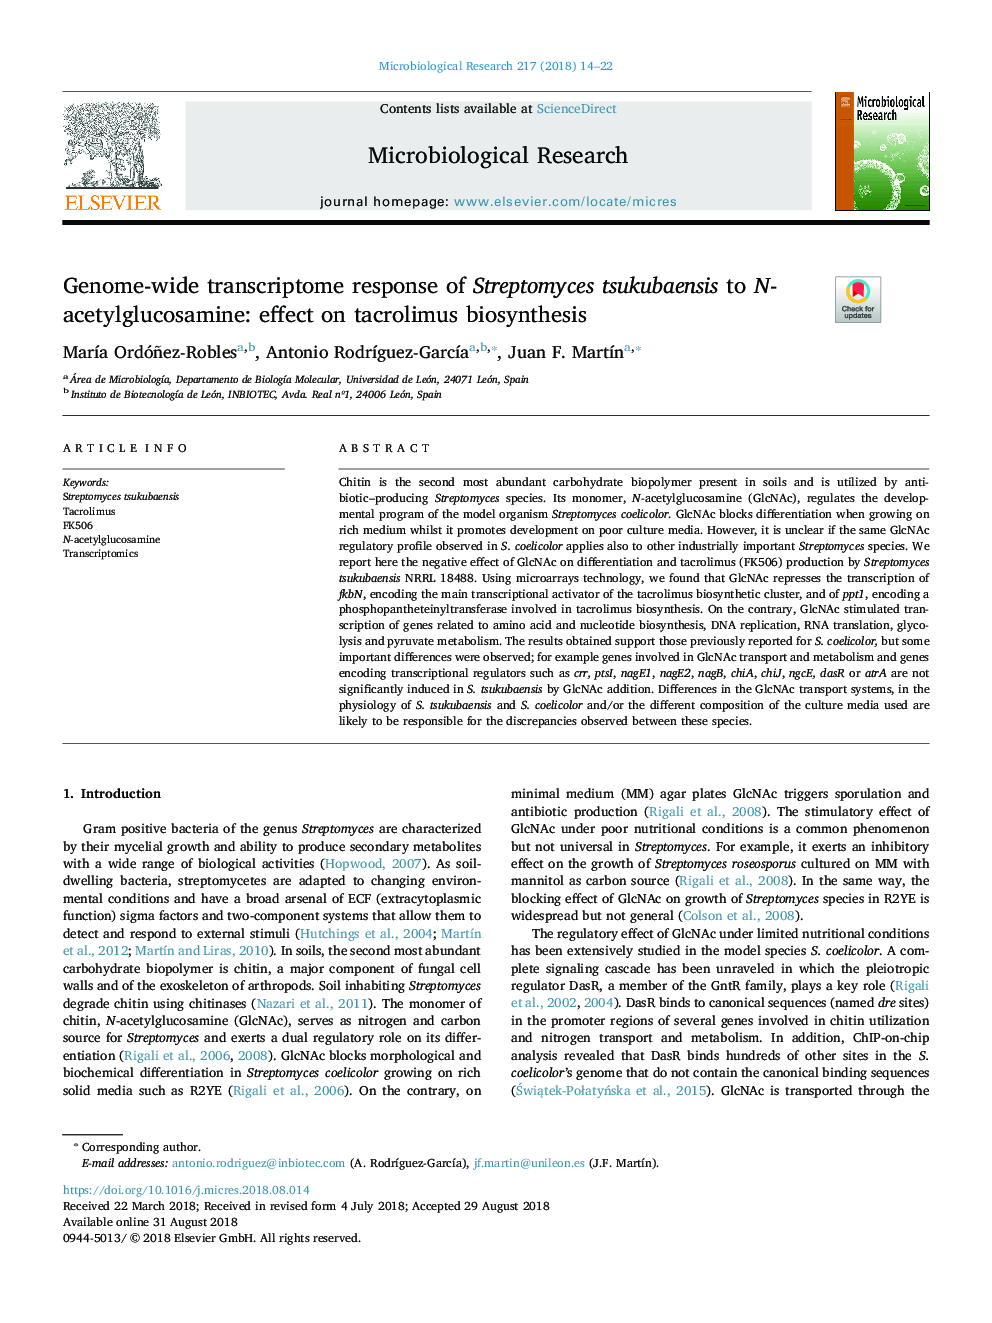 Genome-wide transcriptome response of Streptomyces tsukubaensis to N-acetylglucosamine: effect on tacrolimus biosynthesis